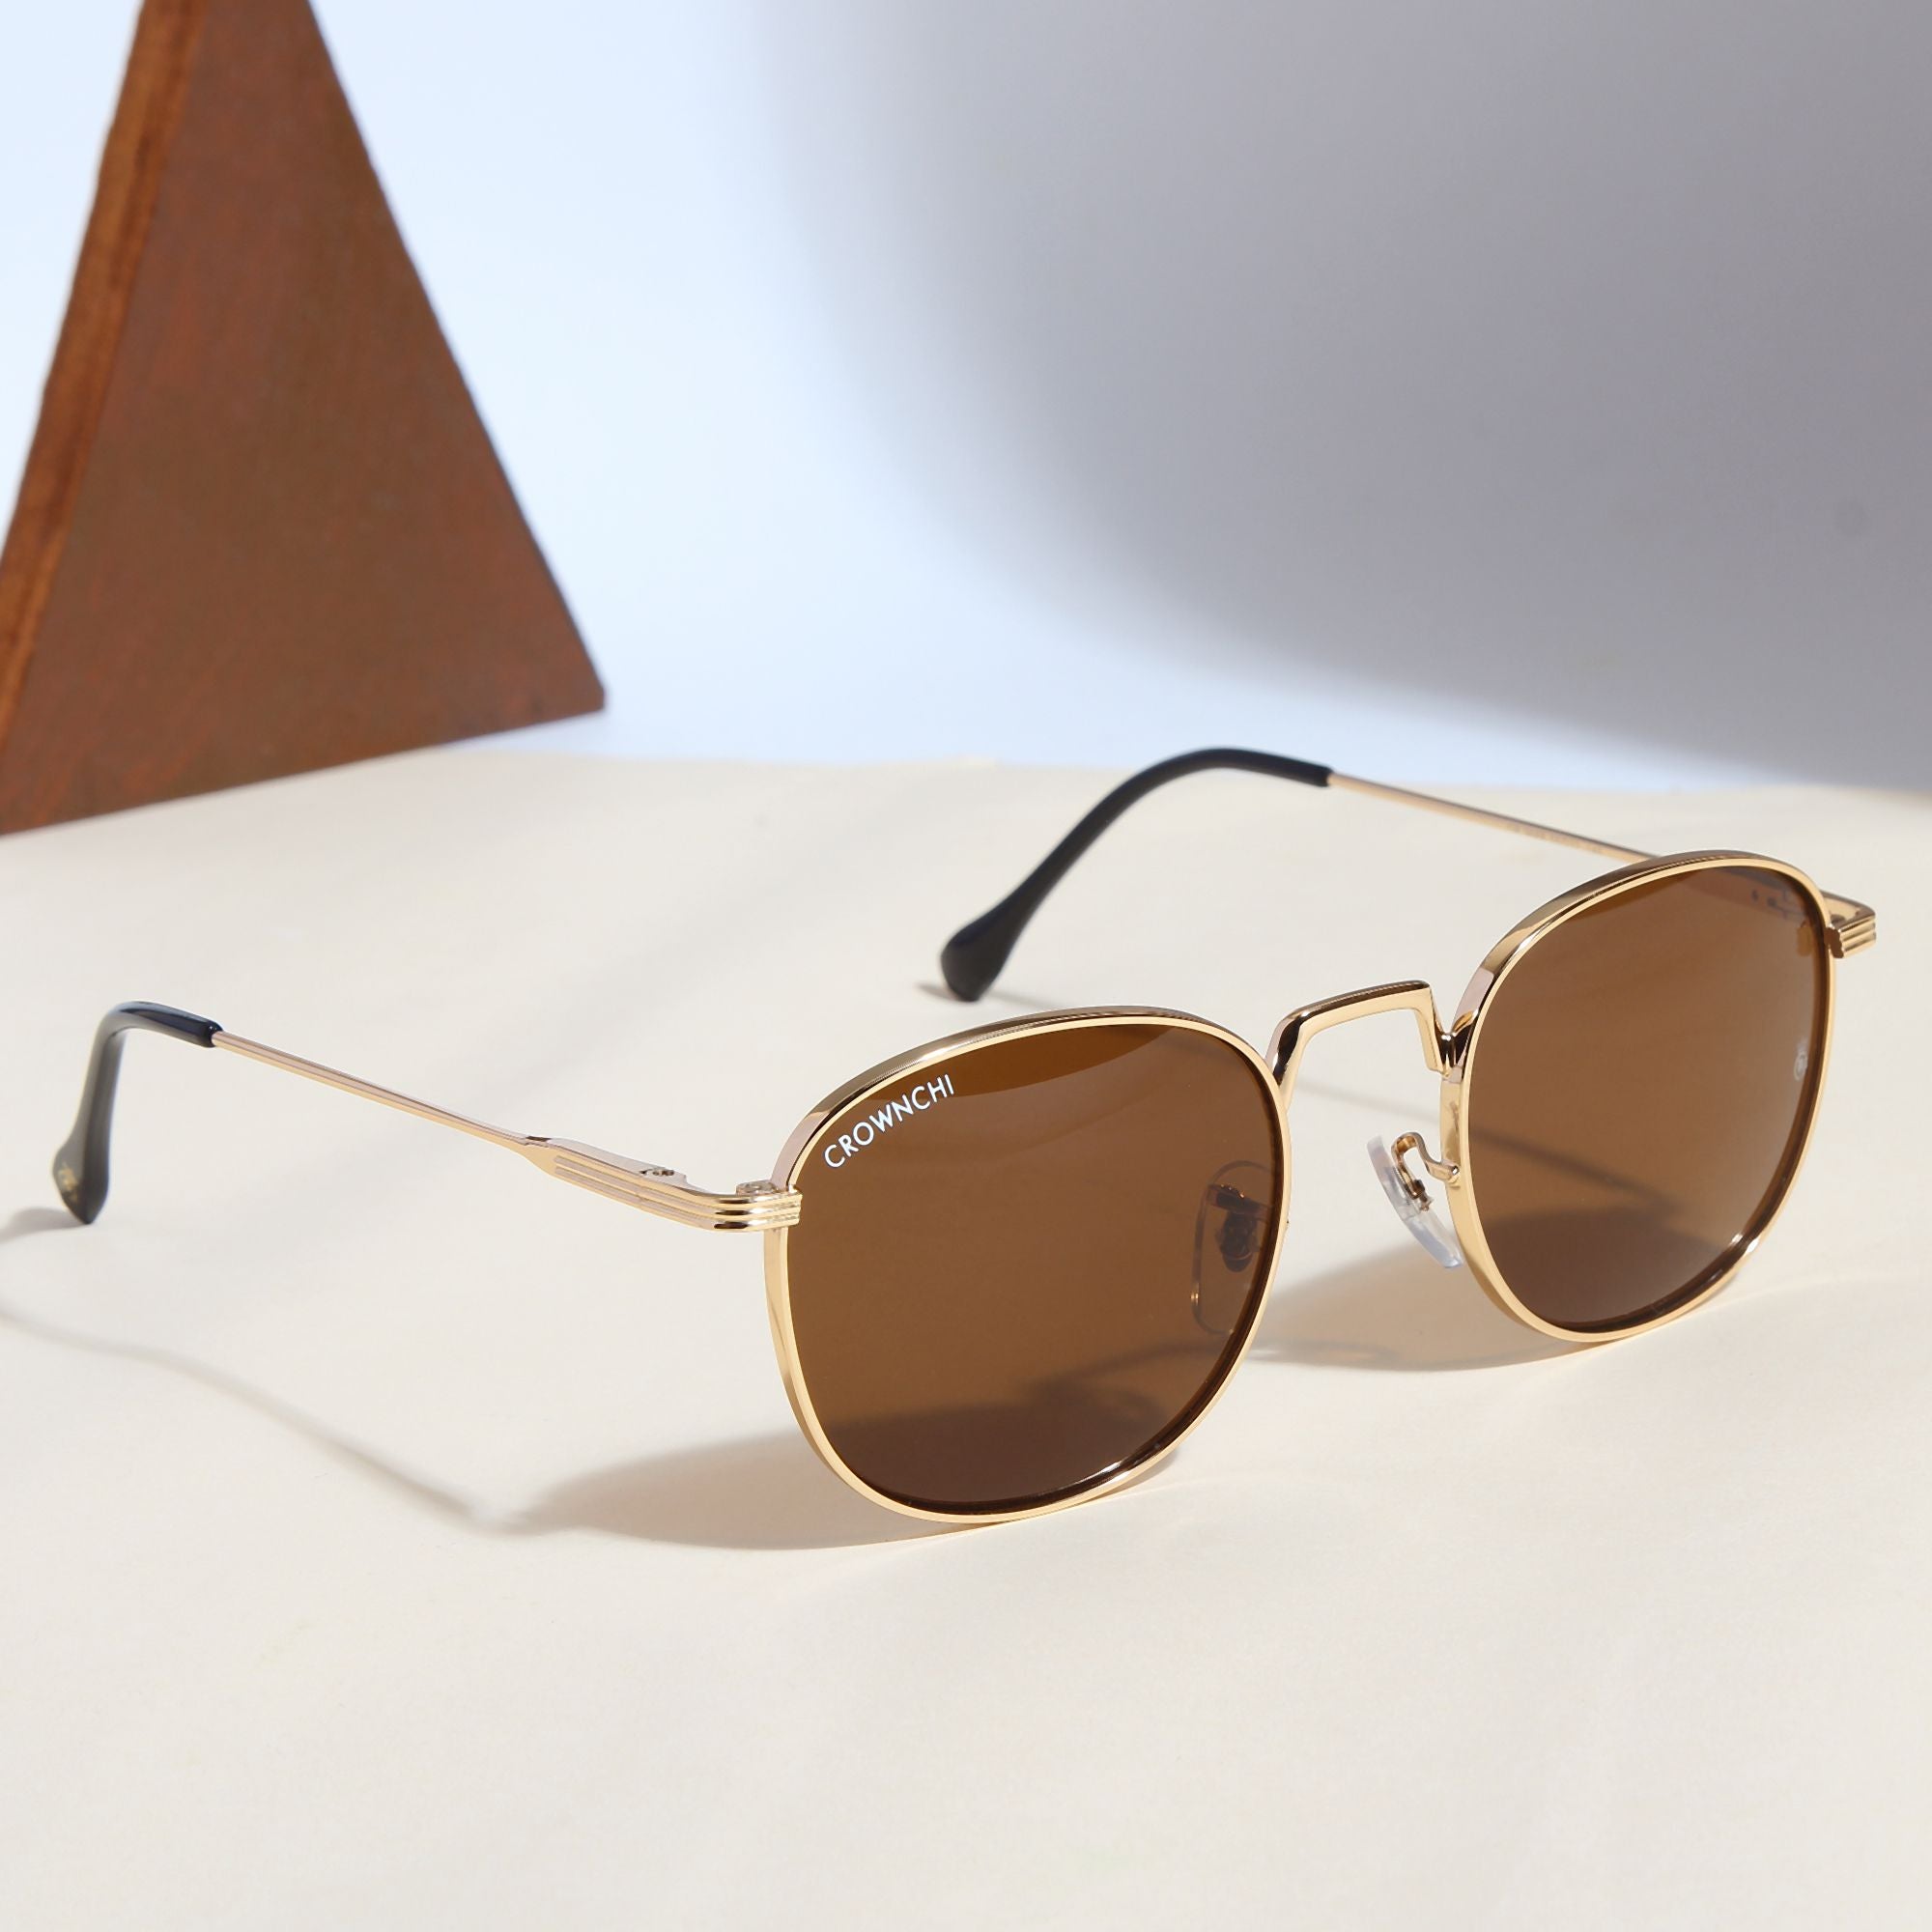 Crownchi Martin Gold Brown Round Edition Sunglasses